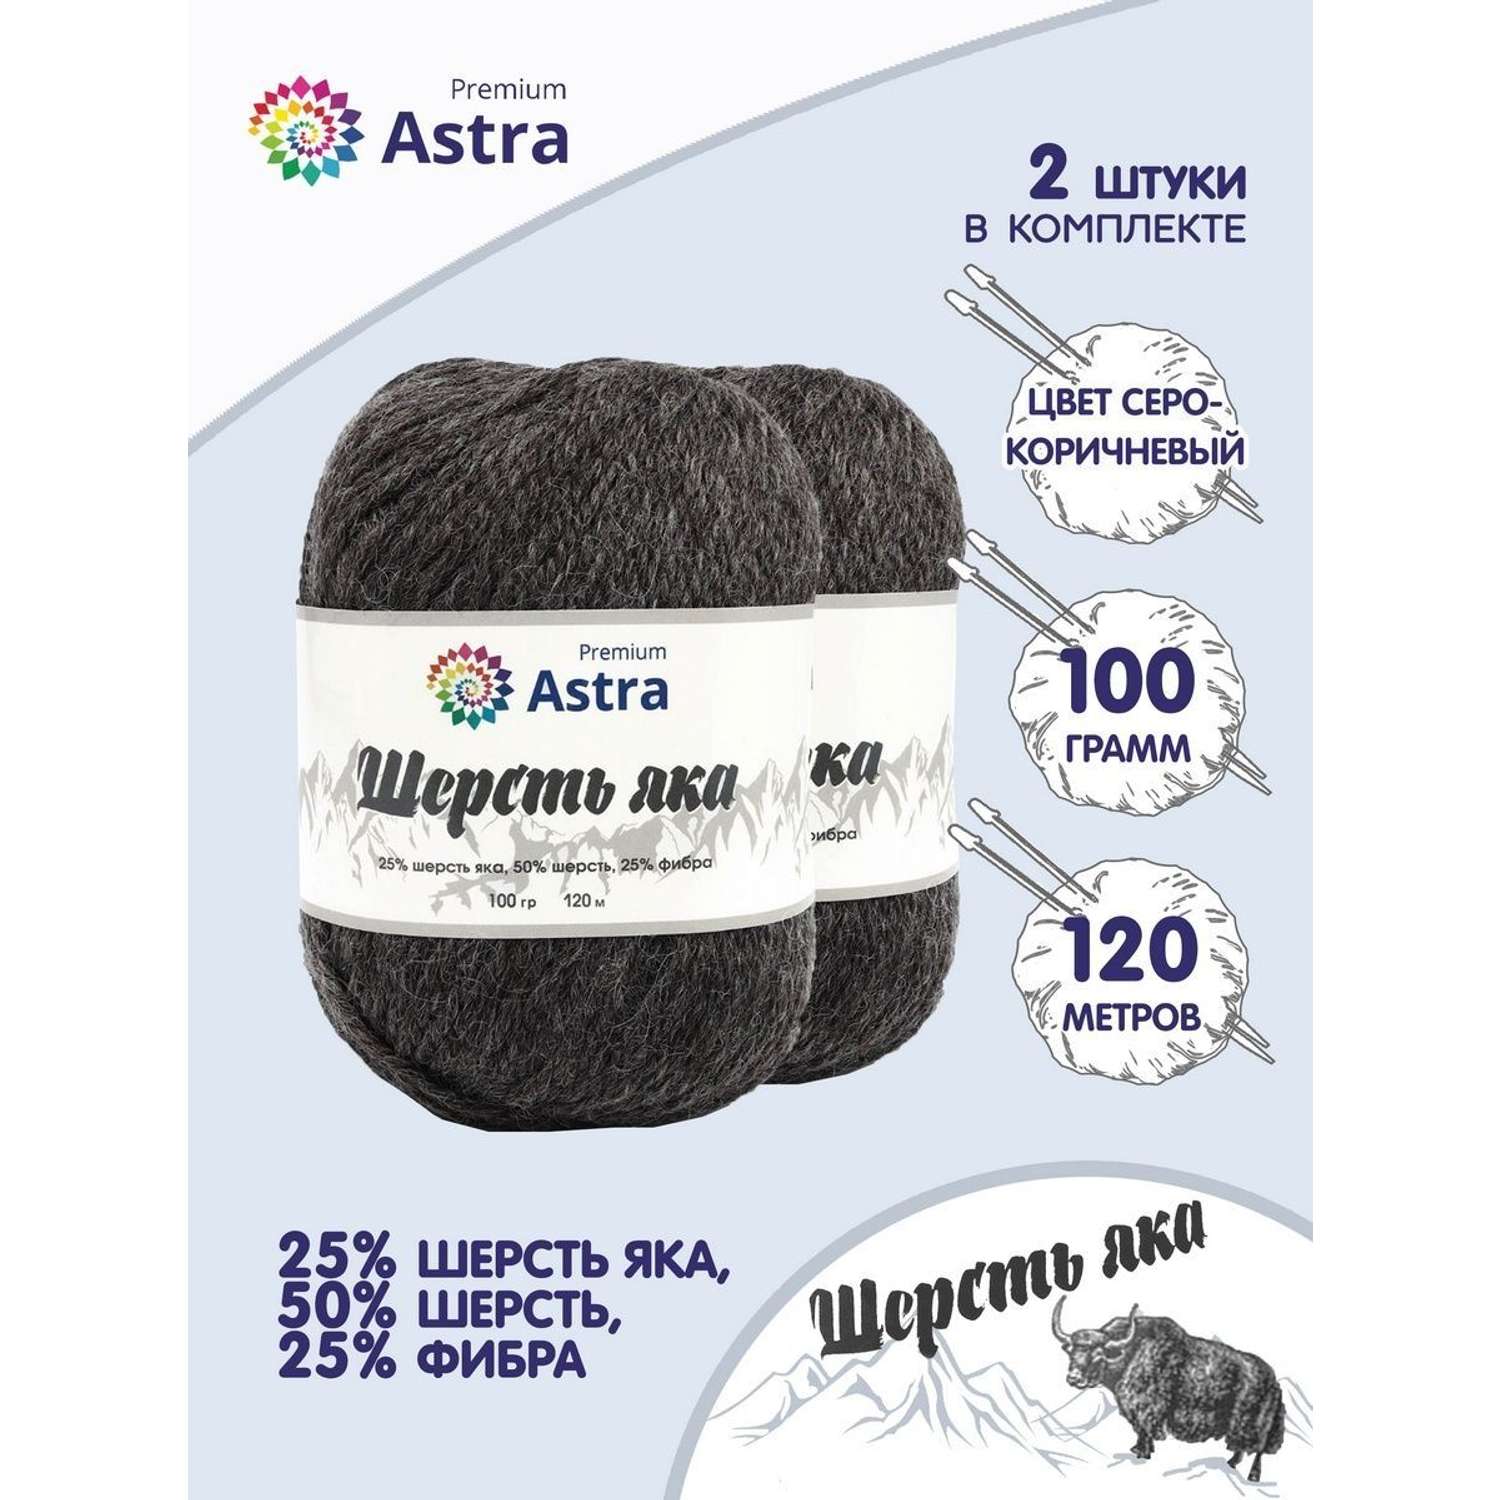 Пряжа Astra Premium Шерсть яка Yak wool теплая мягкая 100 г 120 м 18 серо-коричневый 2 мотка - фото 1